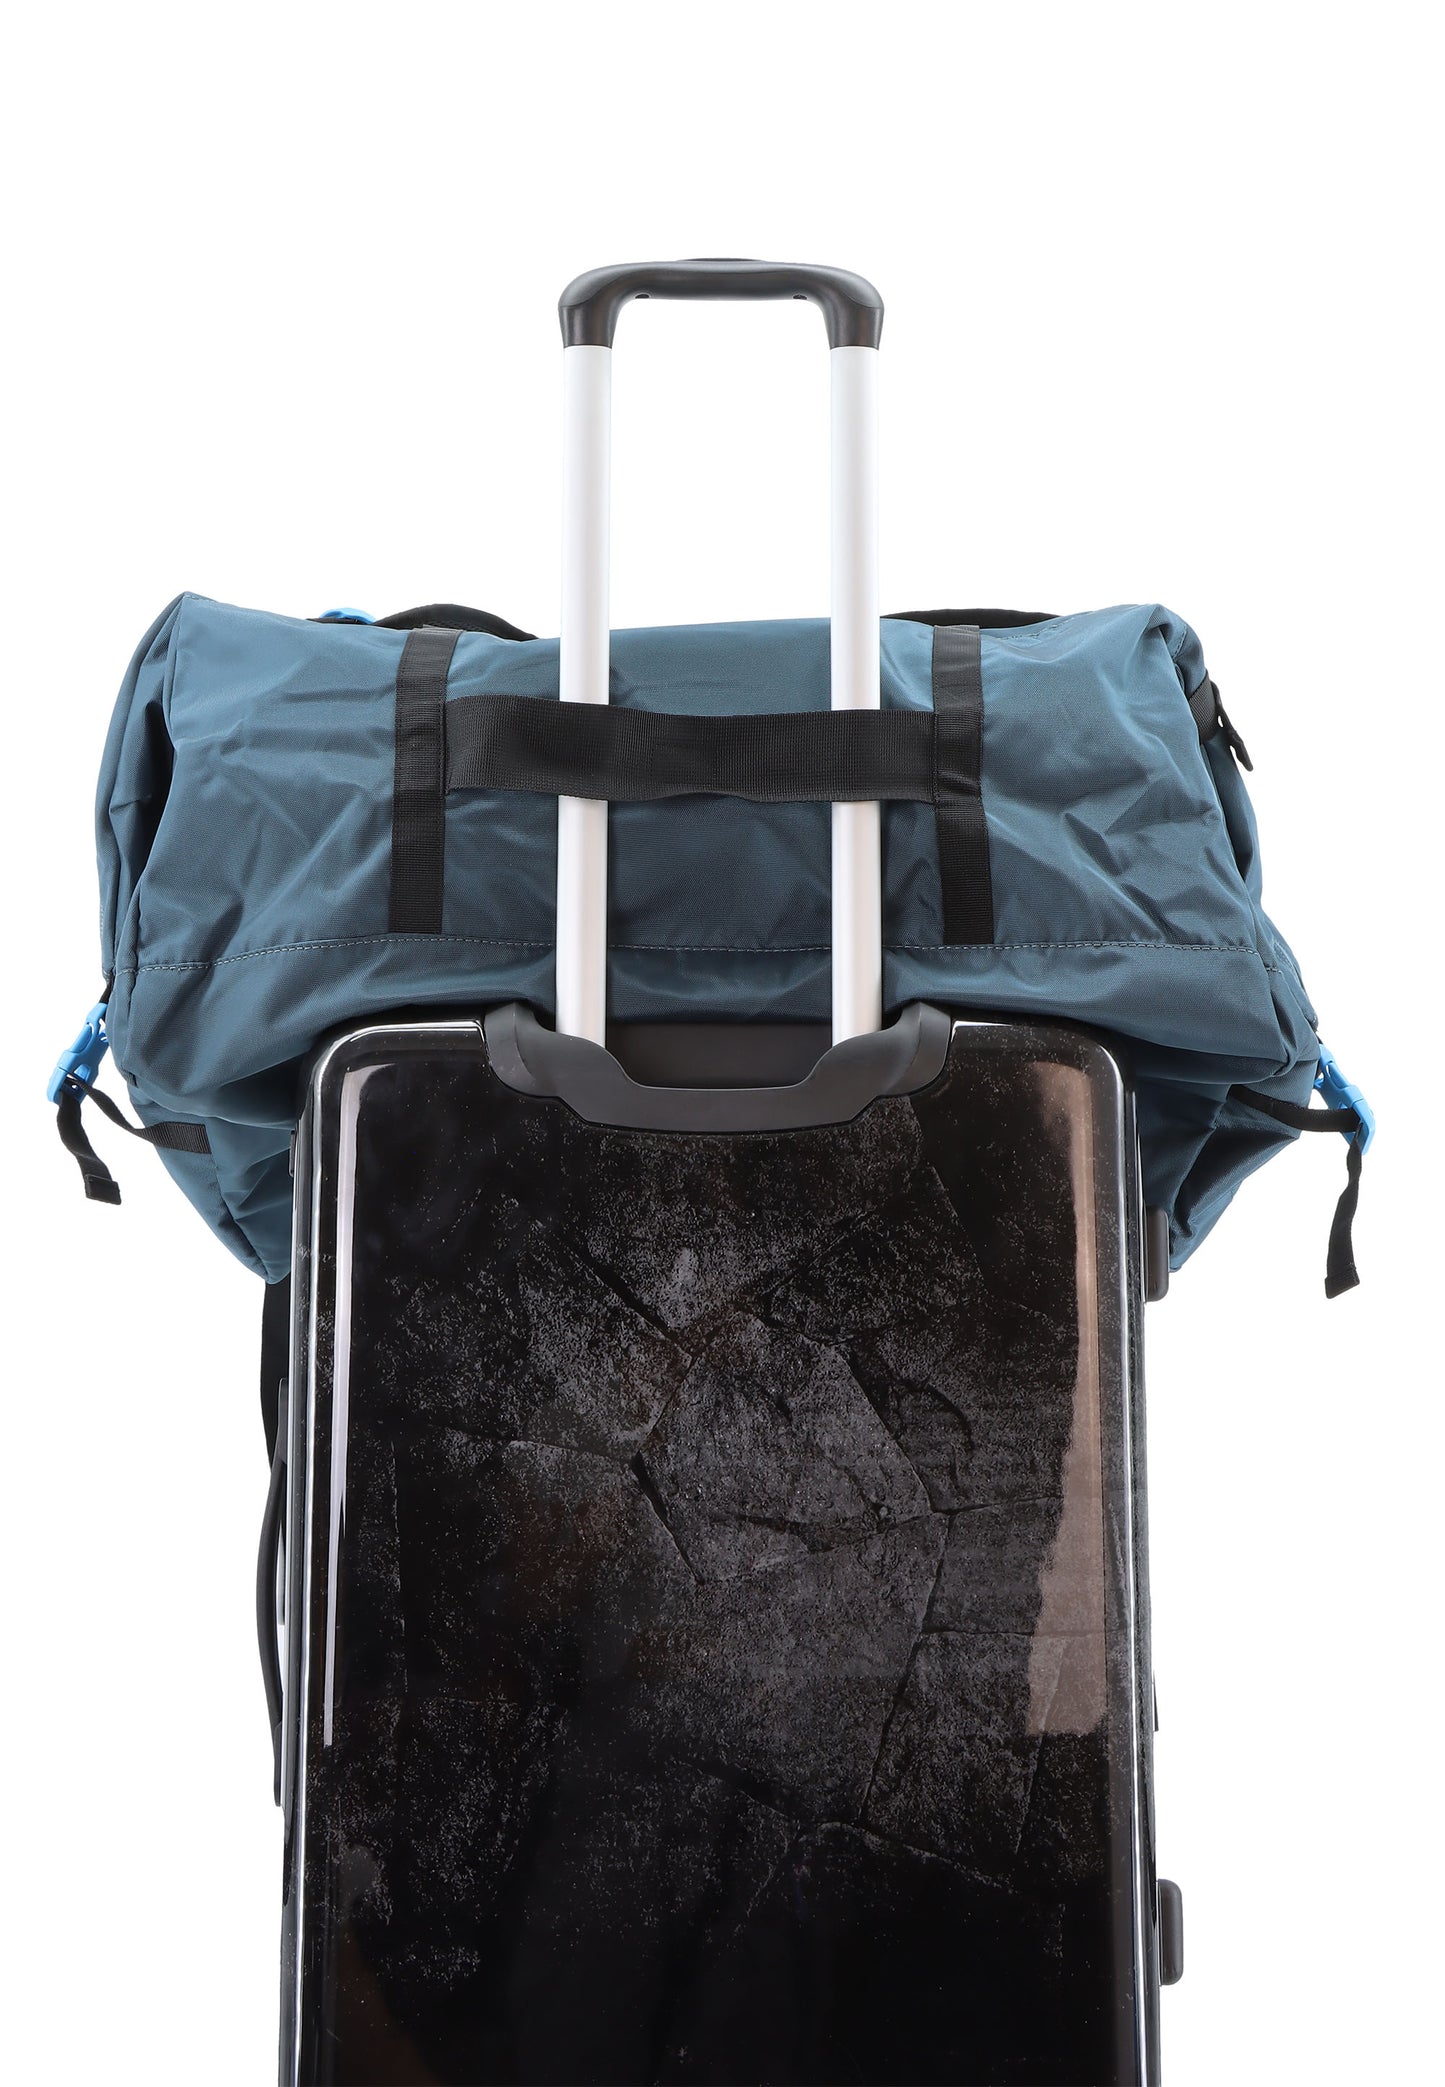 Sac de sport / sac de voyage / sac de sport Discovery - 64 litres (grand) - RPET - Icon - Bleu Pétrole